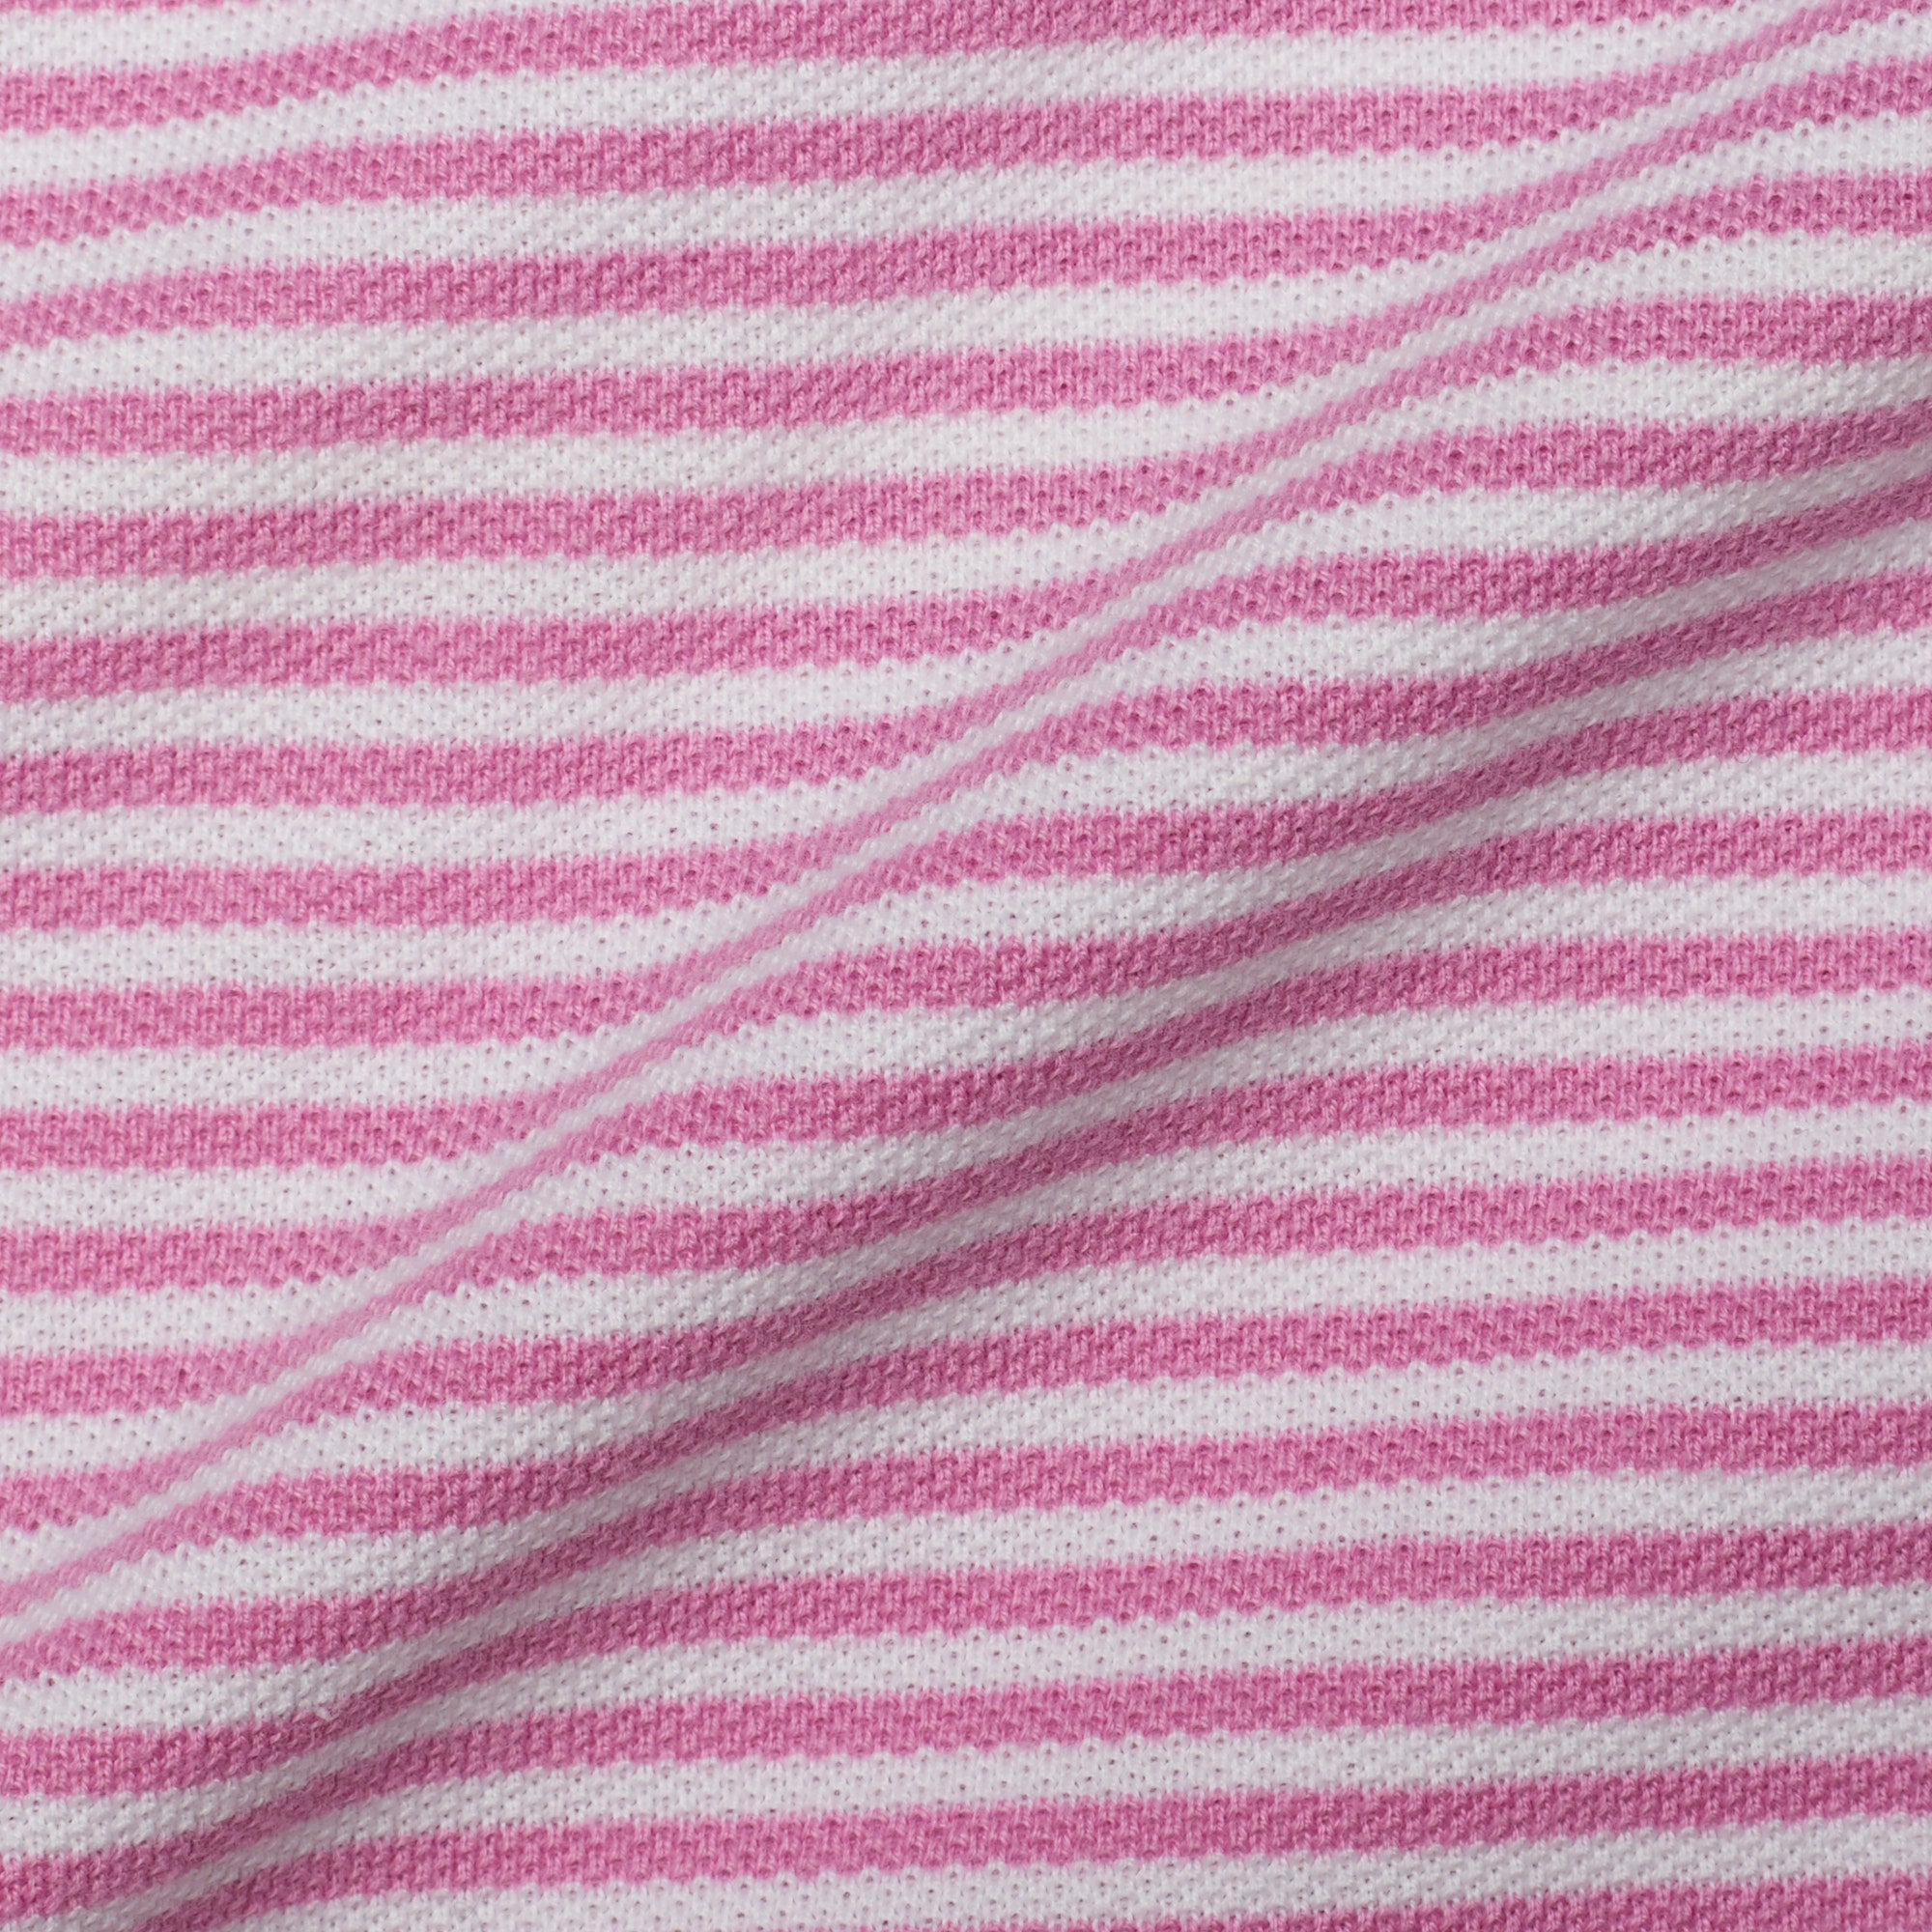 FEDELI Dark Pink Striped Cotton Light Pique Long Sleeve Polo Shirt NEW FEDELI